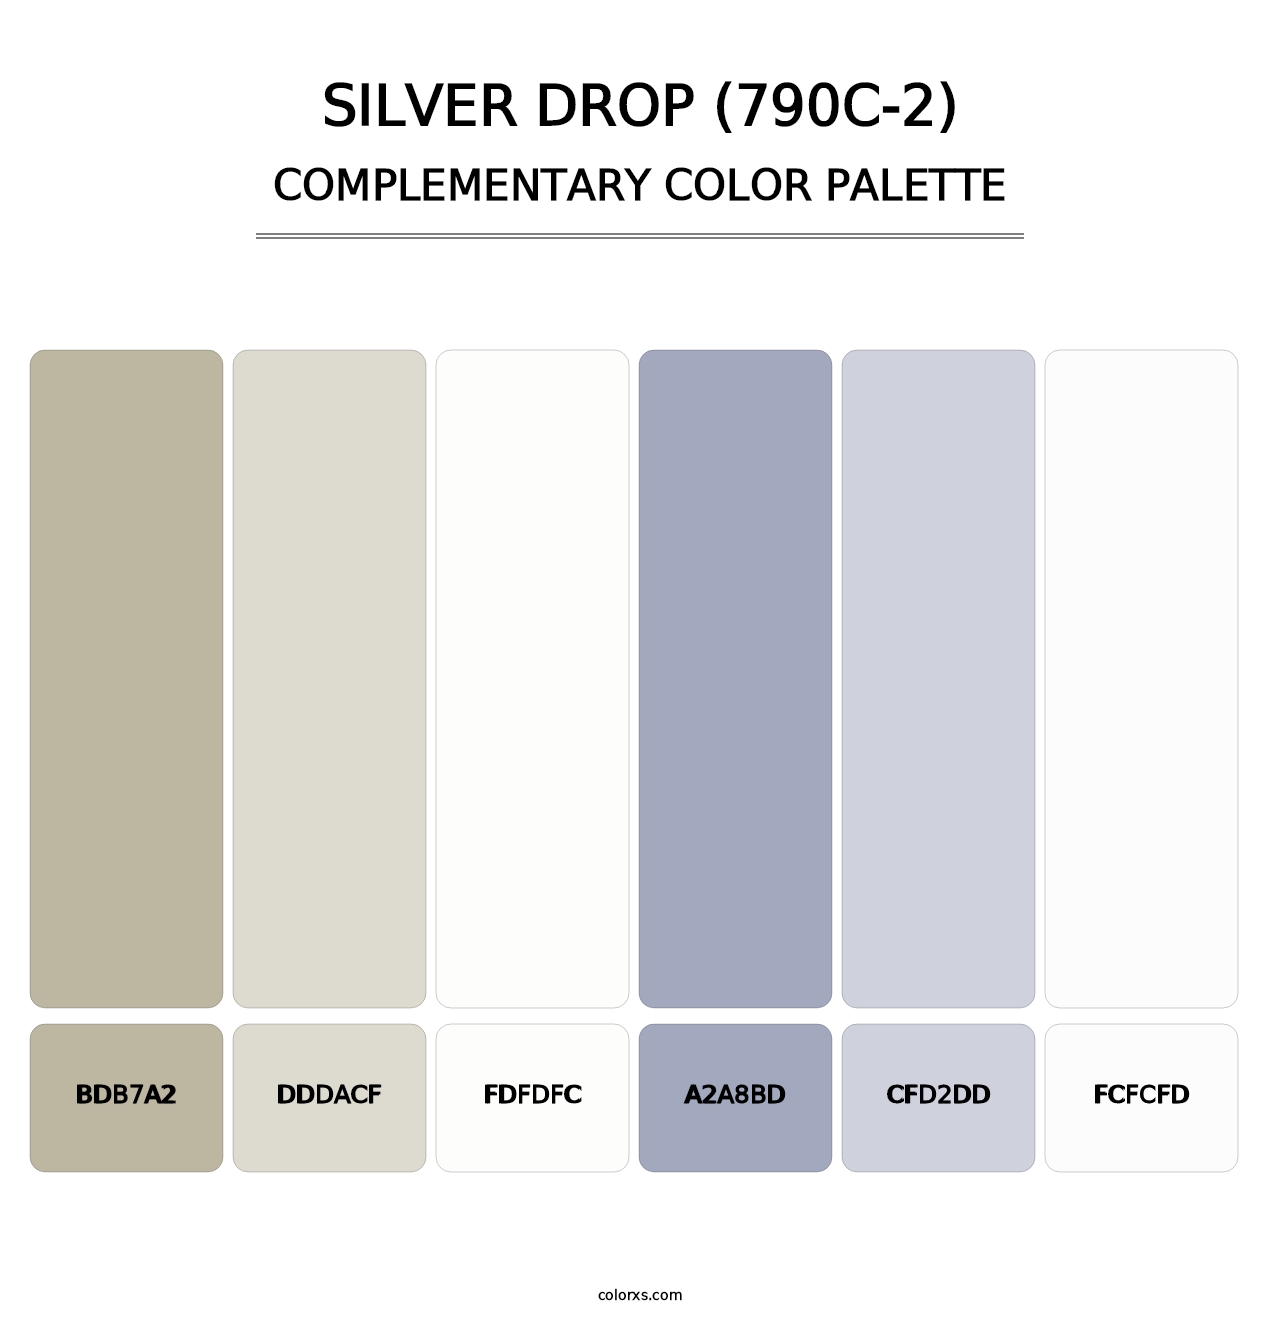 Silver Drop (790C-2) - Complementary Color Palette